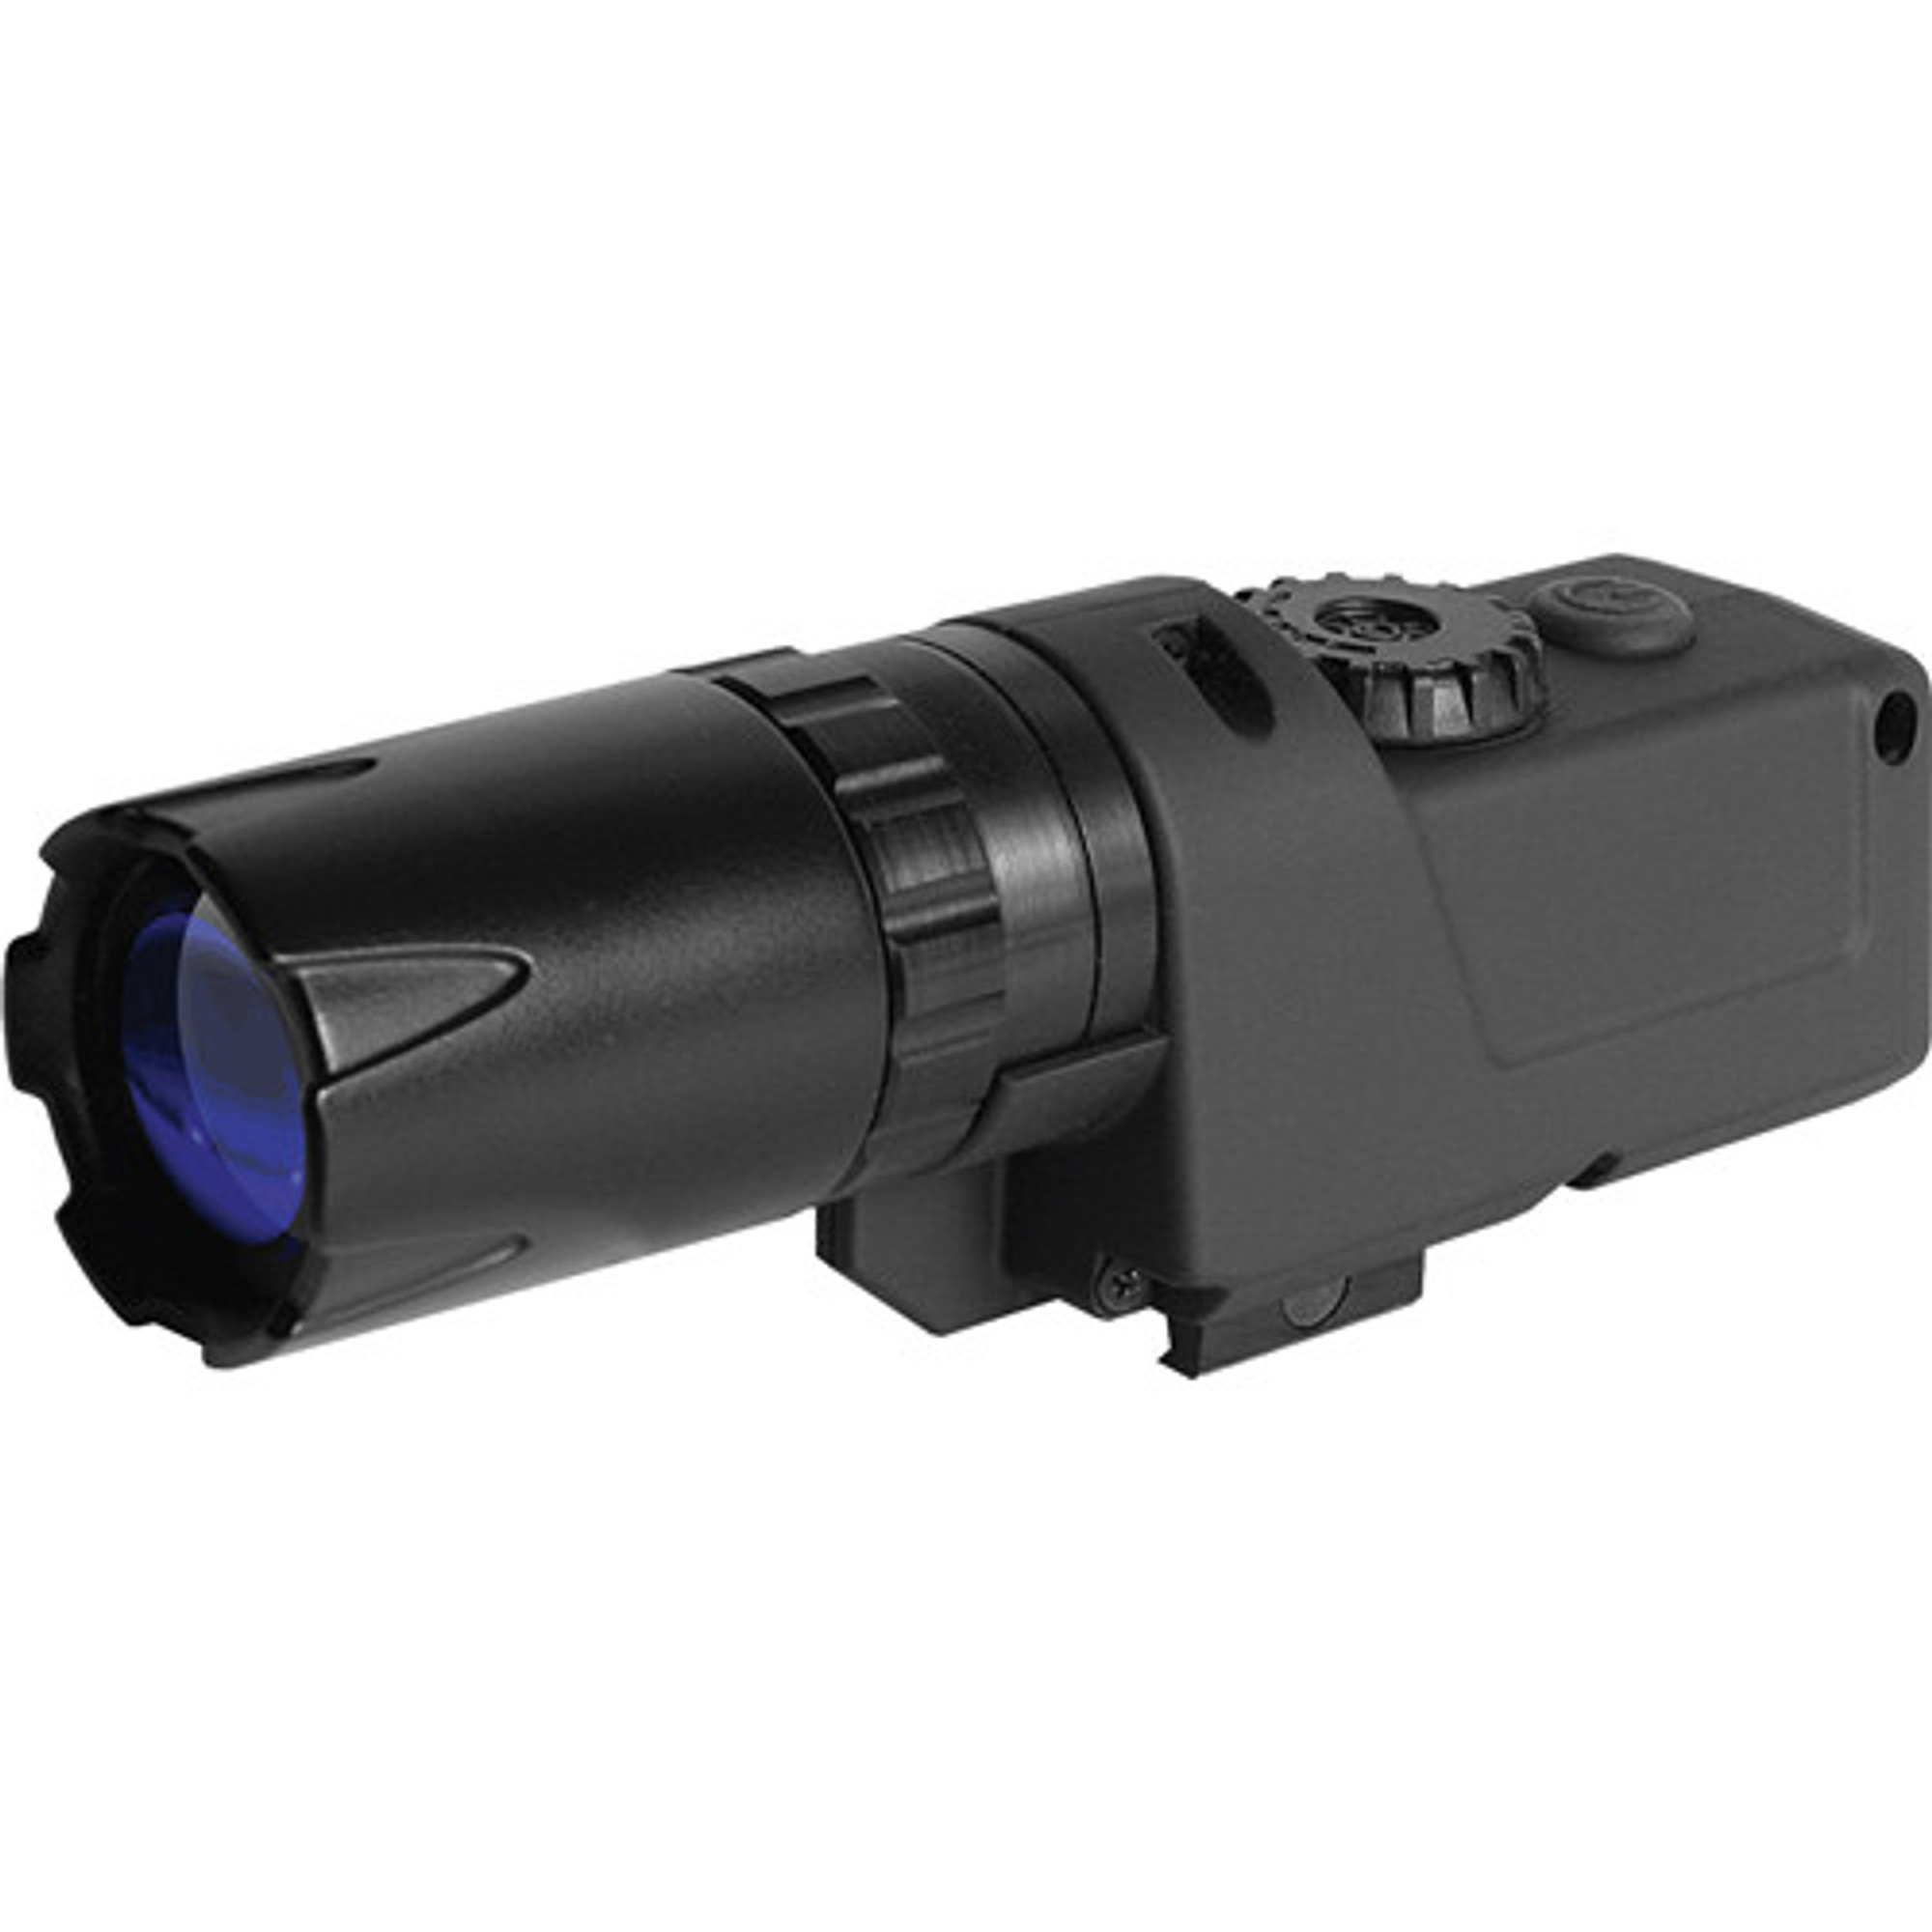 Accessories - Pulsar L-808S Laser Infrared Illuminator